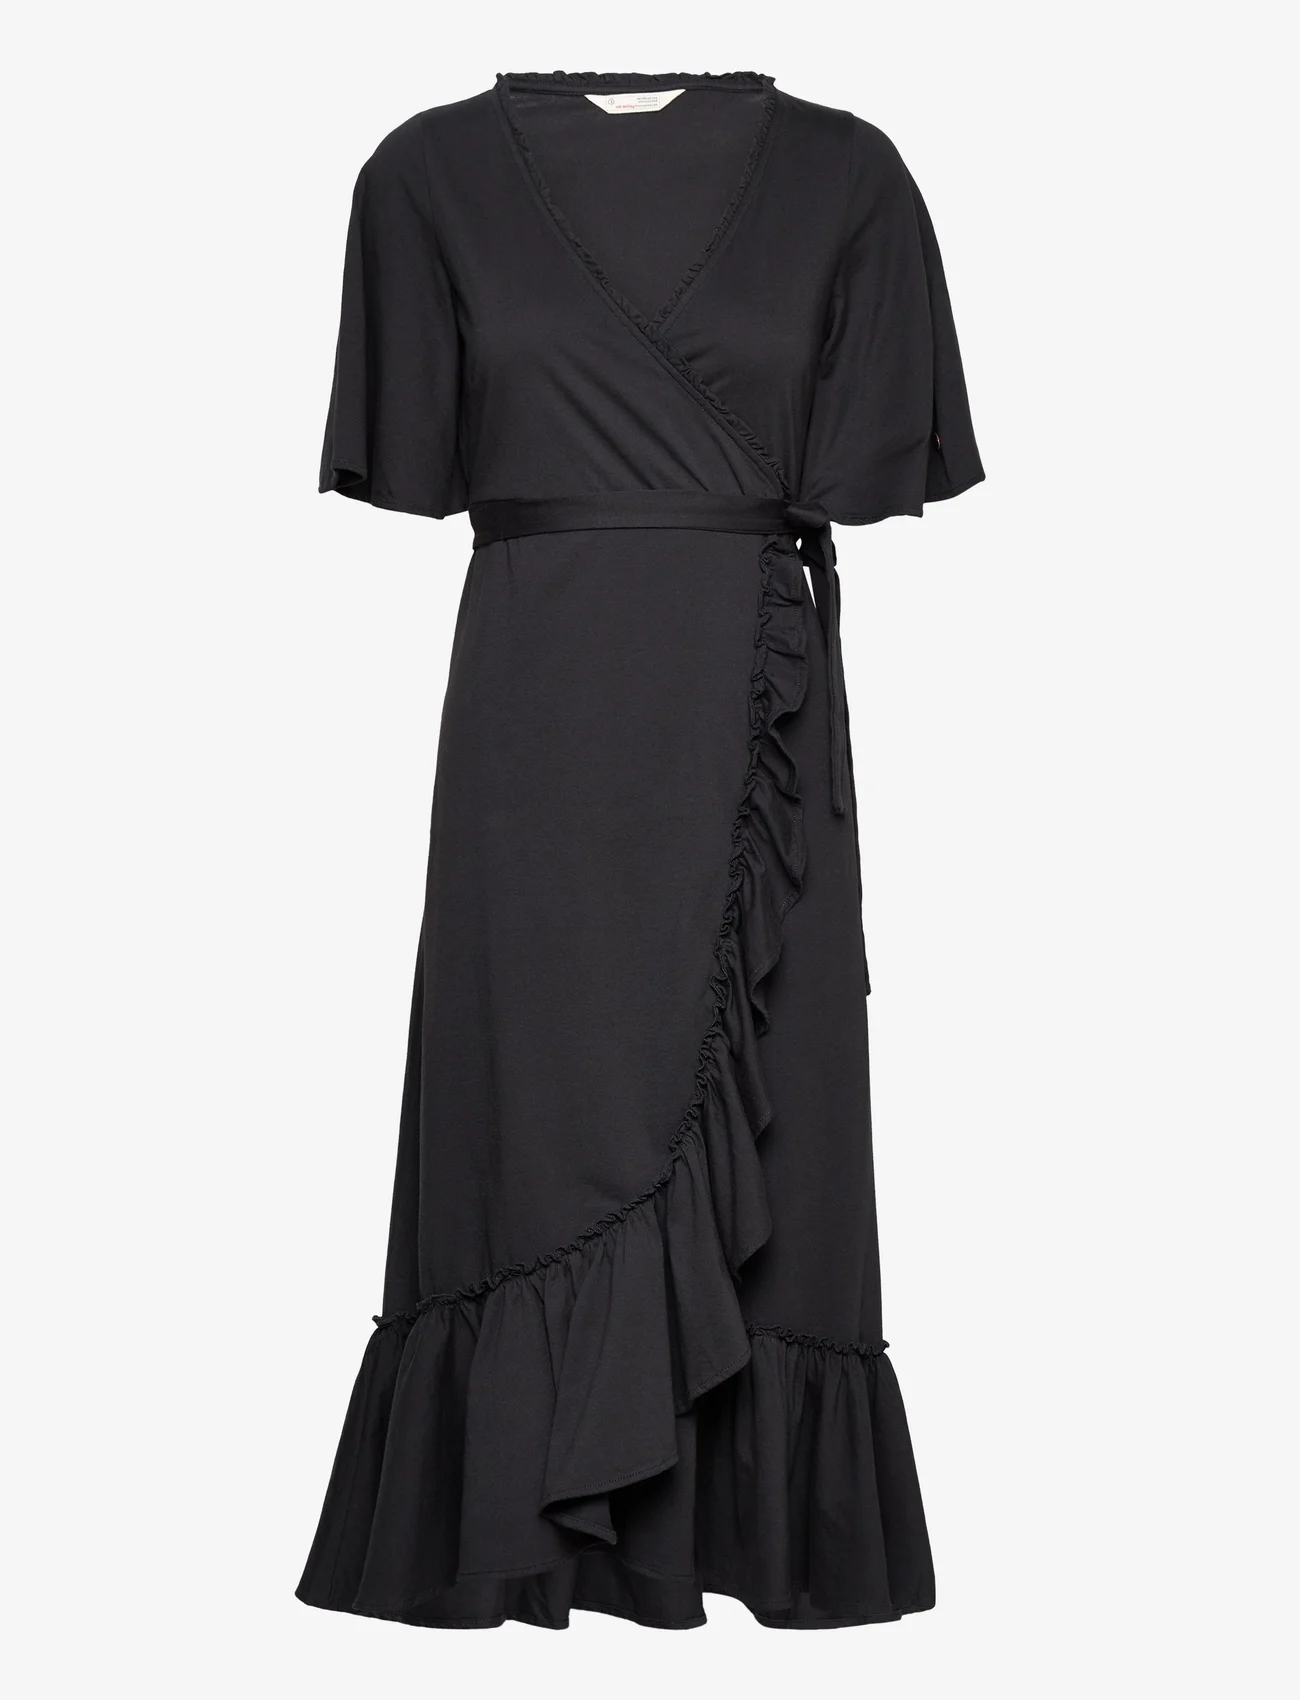 ODD MOLLY - Gracie Dress - wrap dresses - almost black - 0